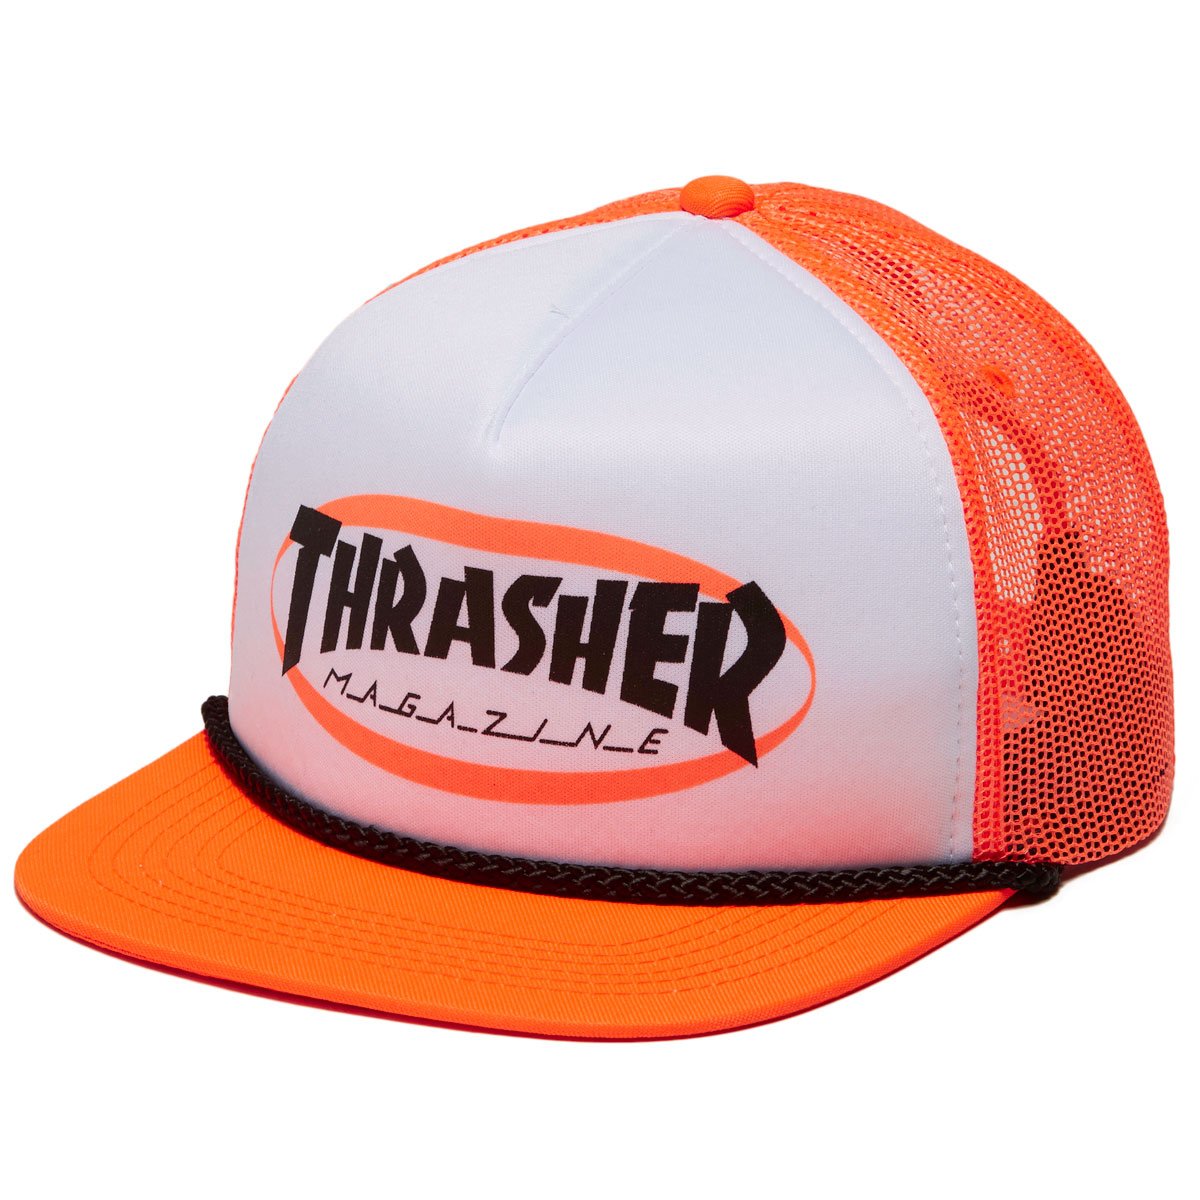 Thrasher Ellipse Mag Logo Trucker Rope Hat - Orange image 1